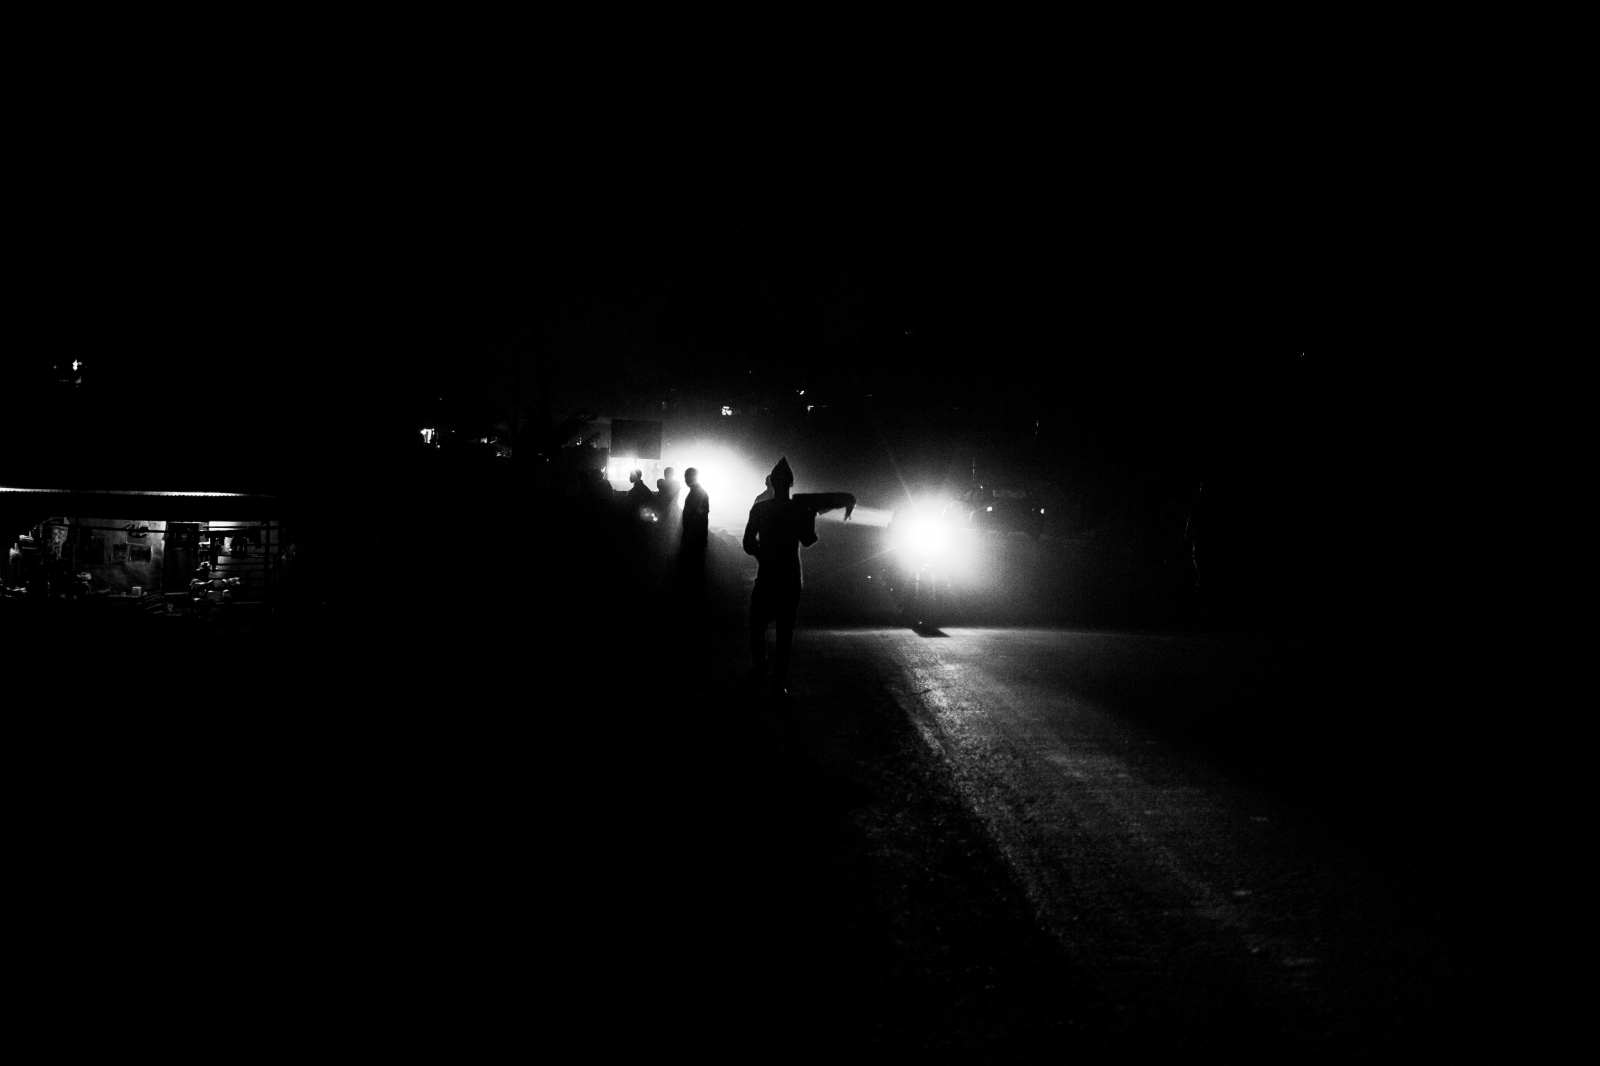 bamenda, cameroon.night falls on nkwen street - 